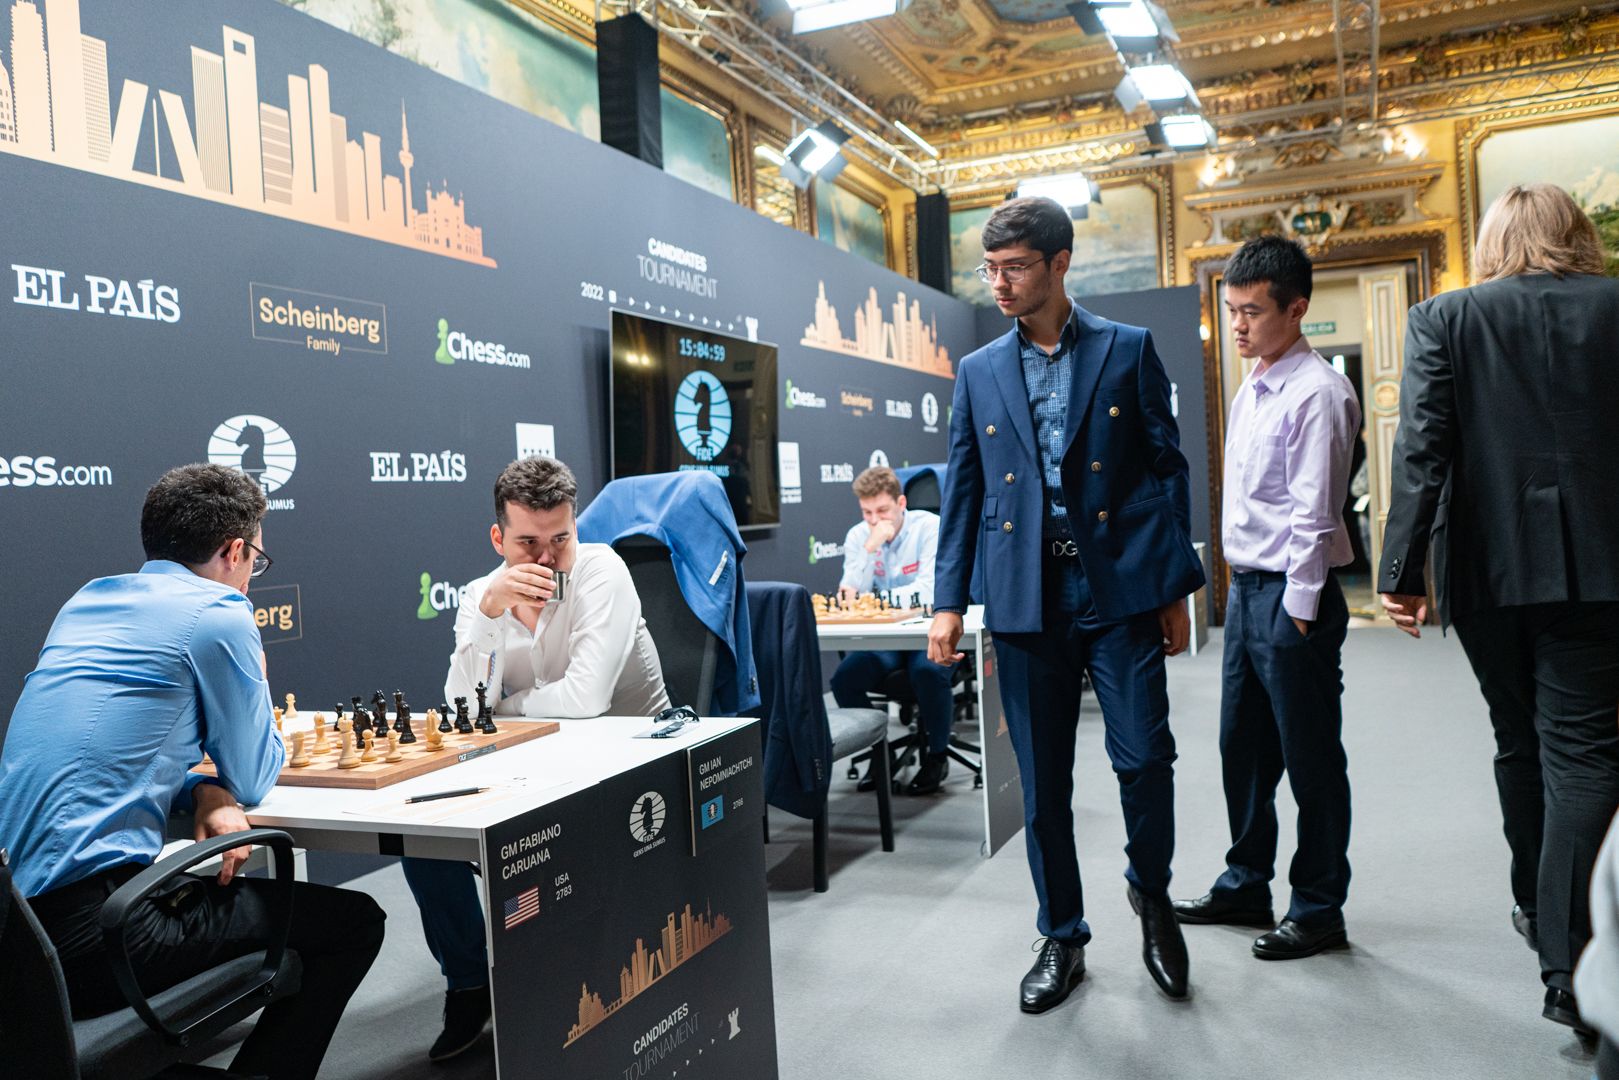 Caruana and Nepomniachtchi shine in R1 of the FIDE Candidates Tournament –  Chessdom